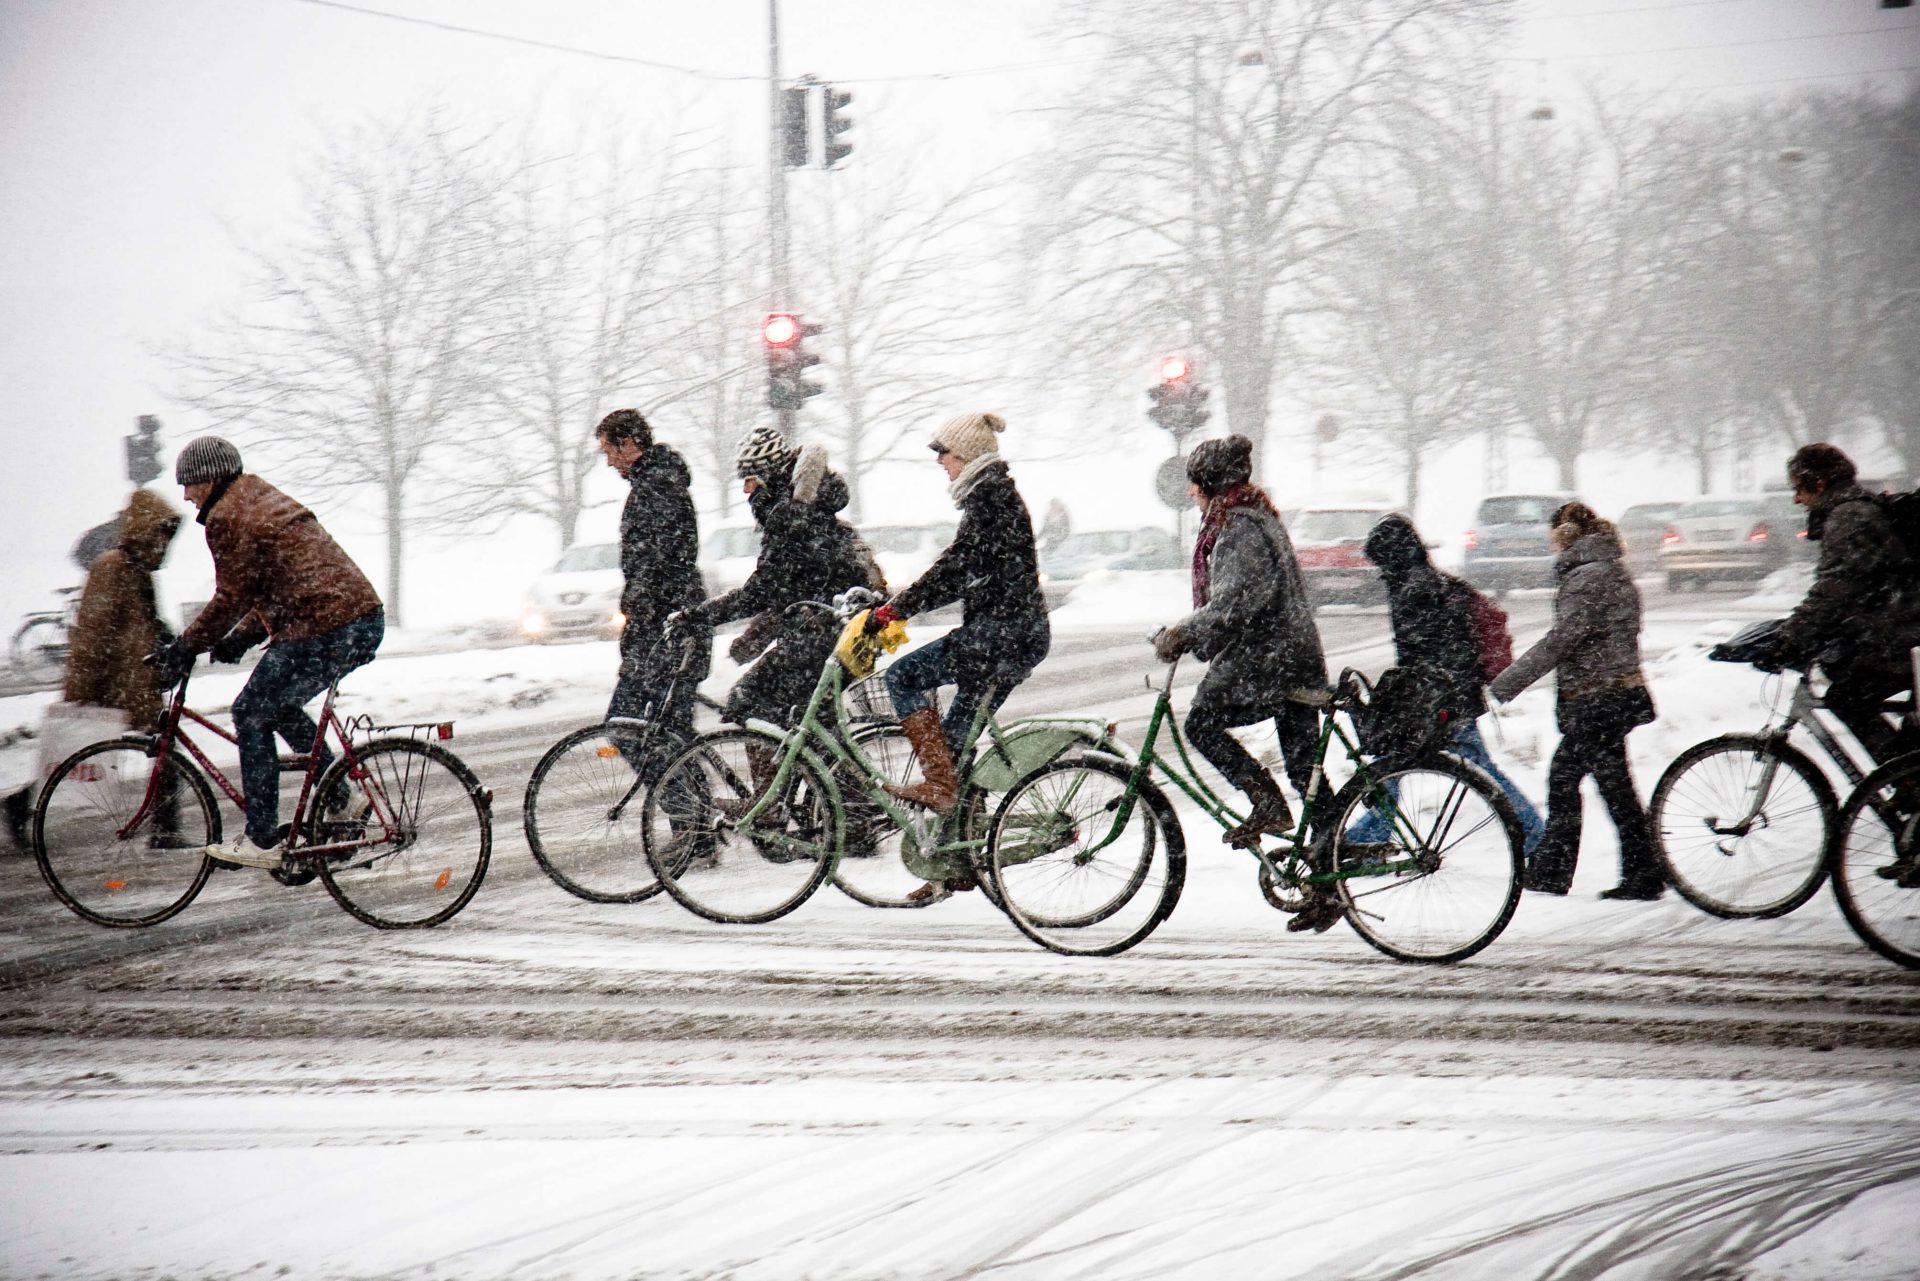 James Thoem - bikes in winter